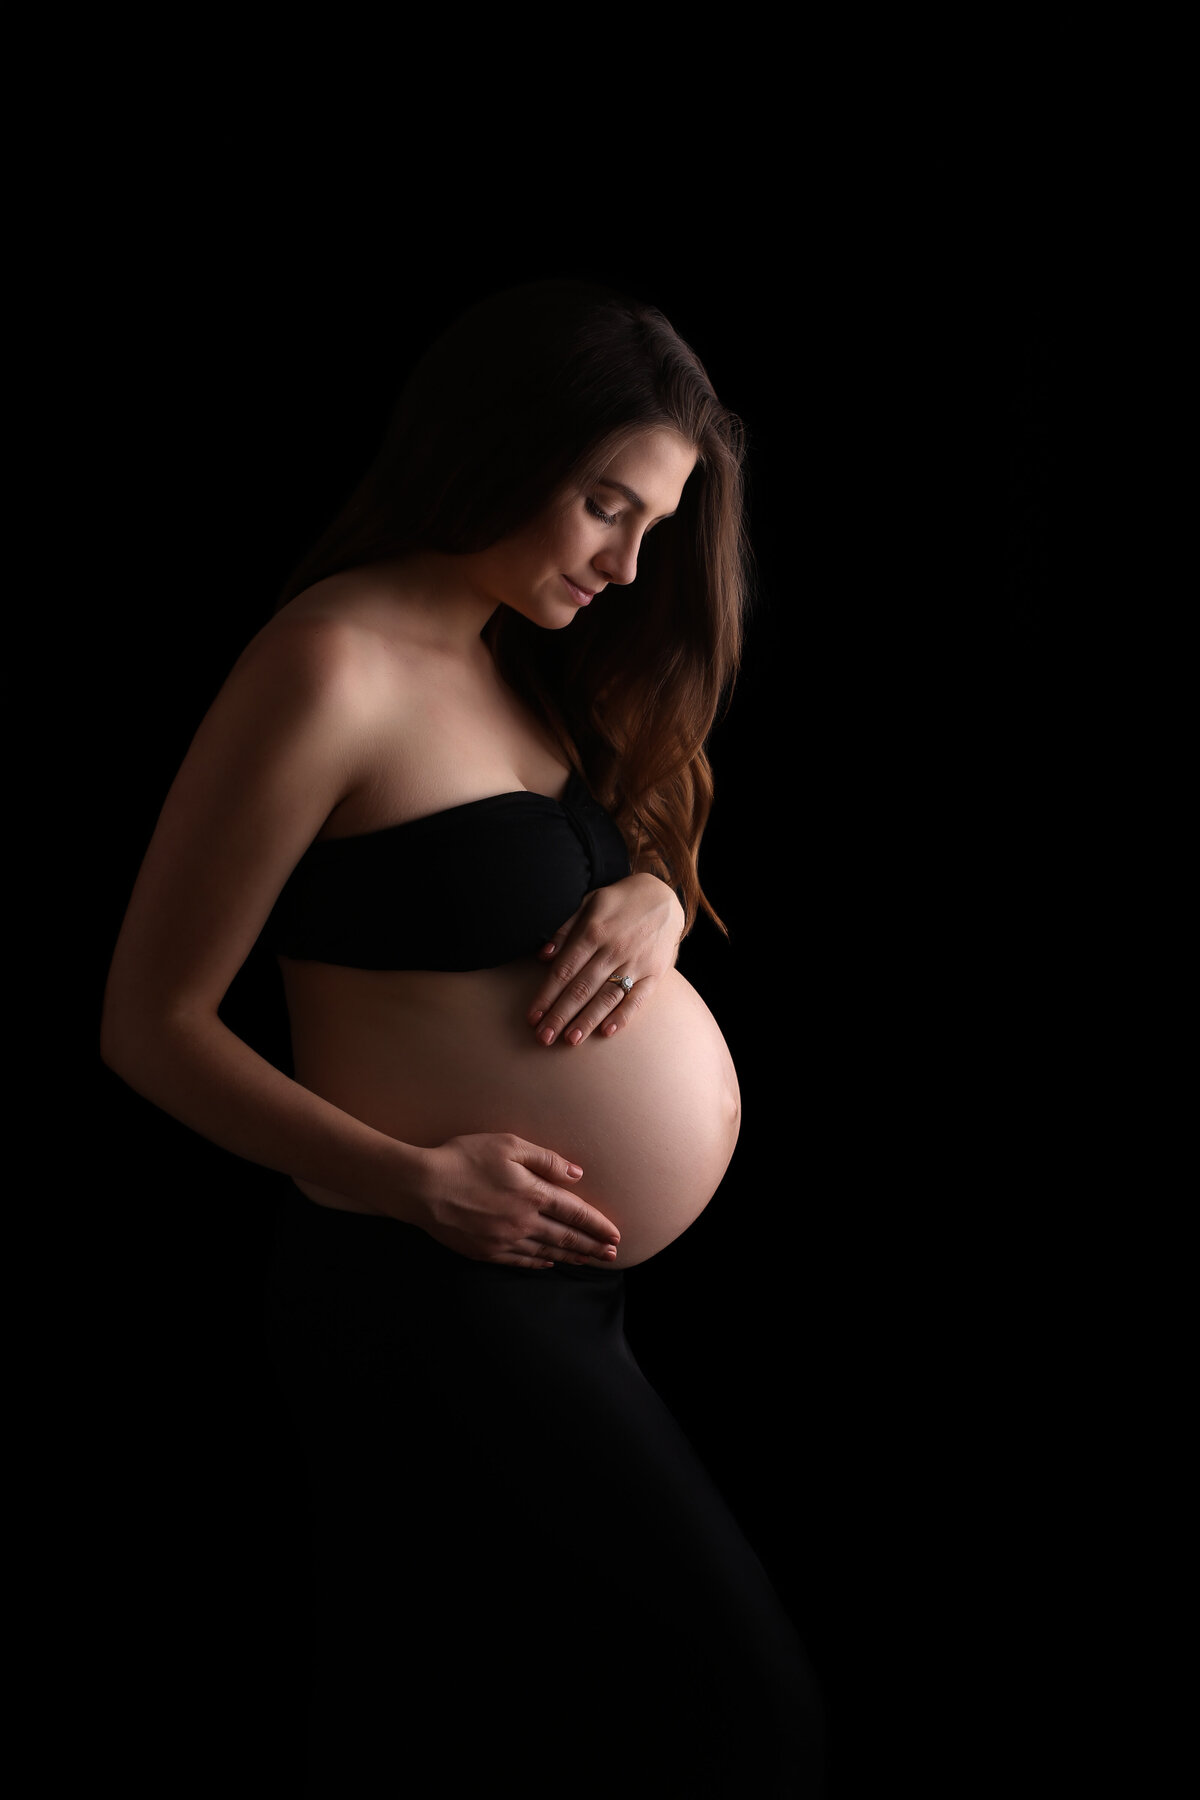 Maternity image with black background